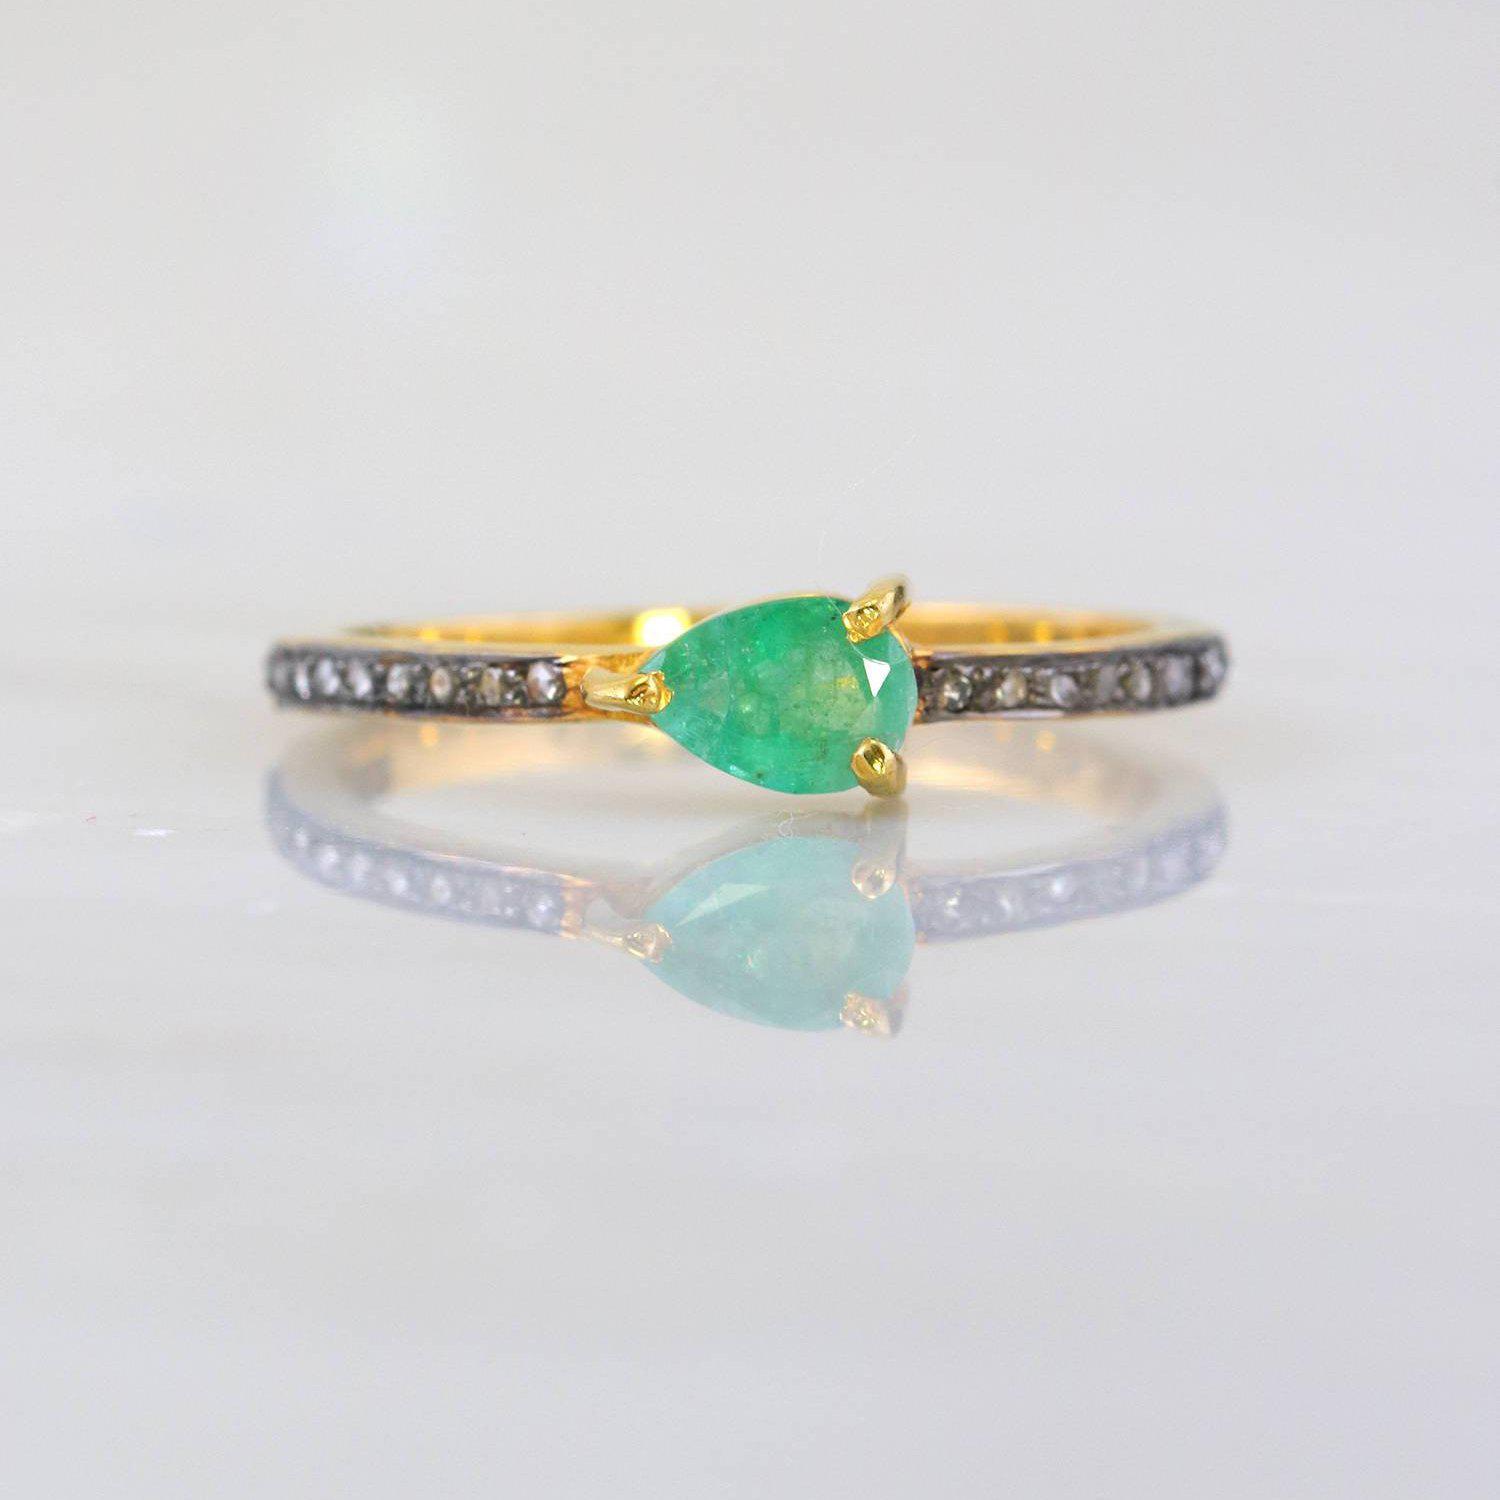 Fine Emerald Ring, Teardrop Diamond Ring, Elegant Delicate Ring, Elegant Fine Jewelry, Diamond Stacking Ring, Emerald Jewelry, Mother's Gift